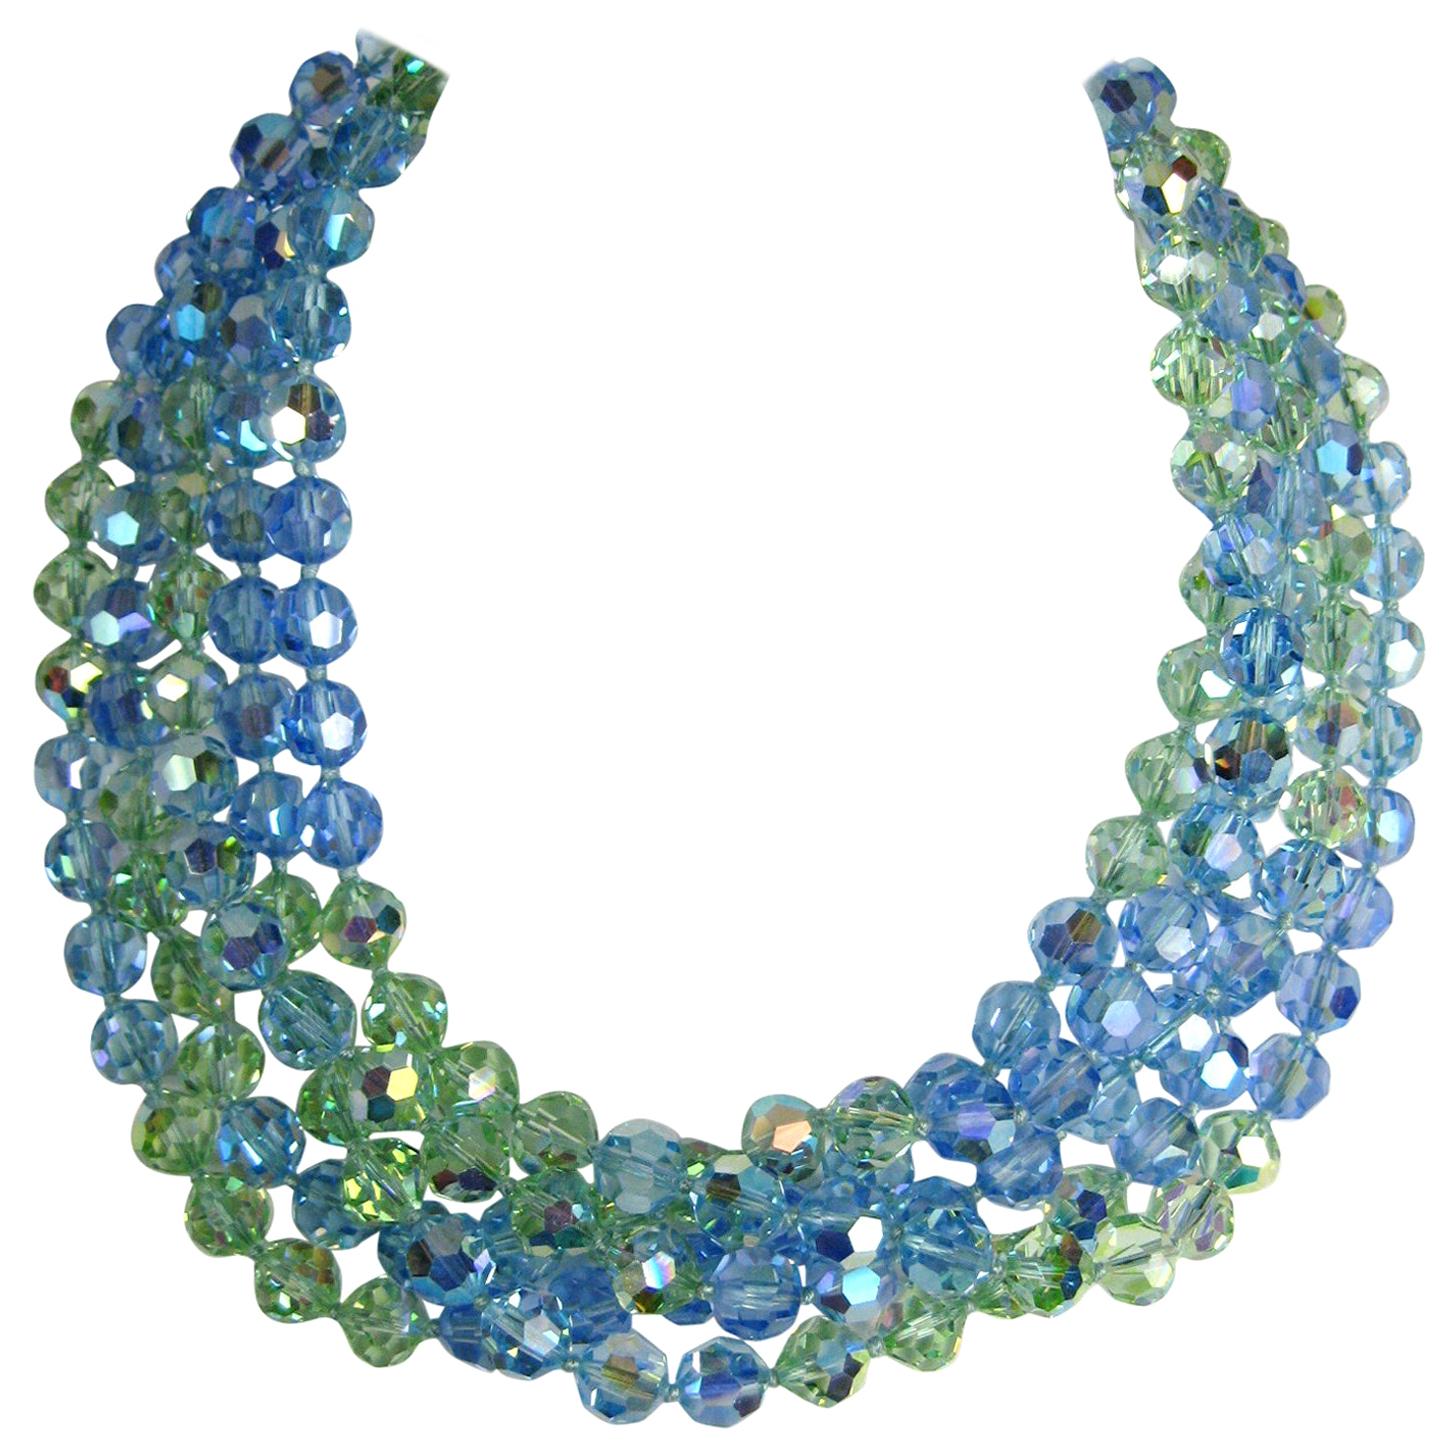  5 Strand Blue Green Crystal Bib Necklace New, Never worn 1990s Ciner  For Sale